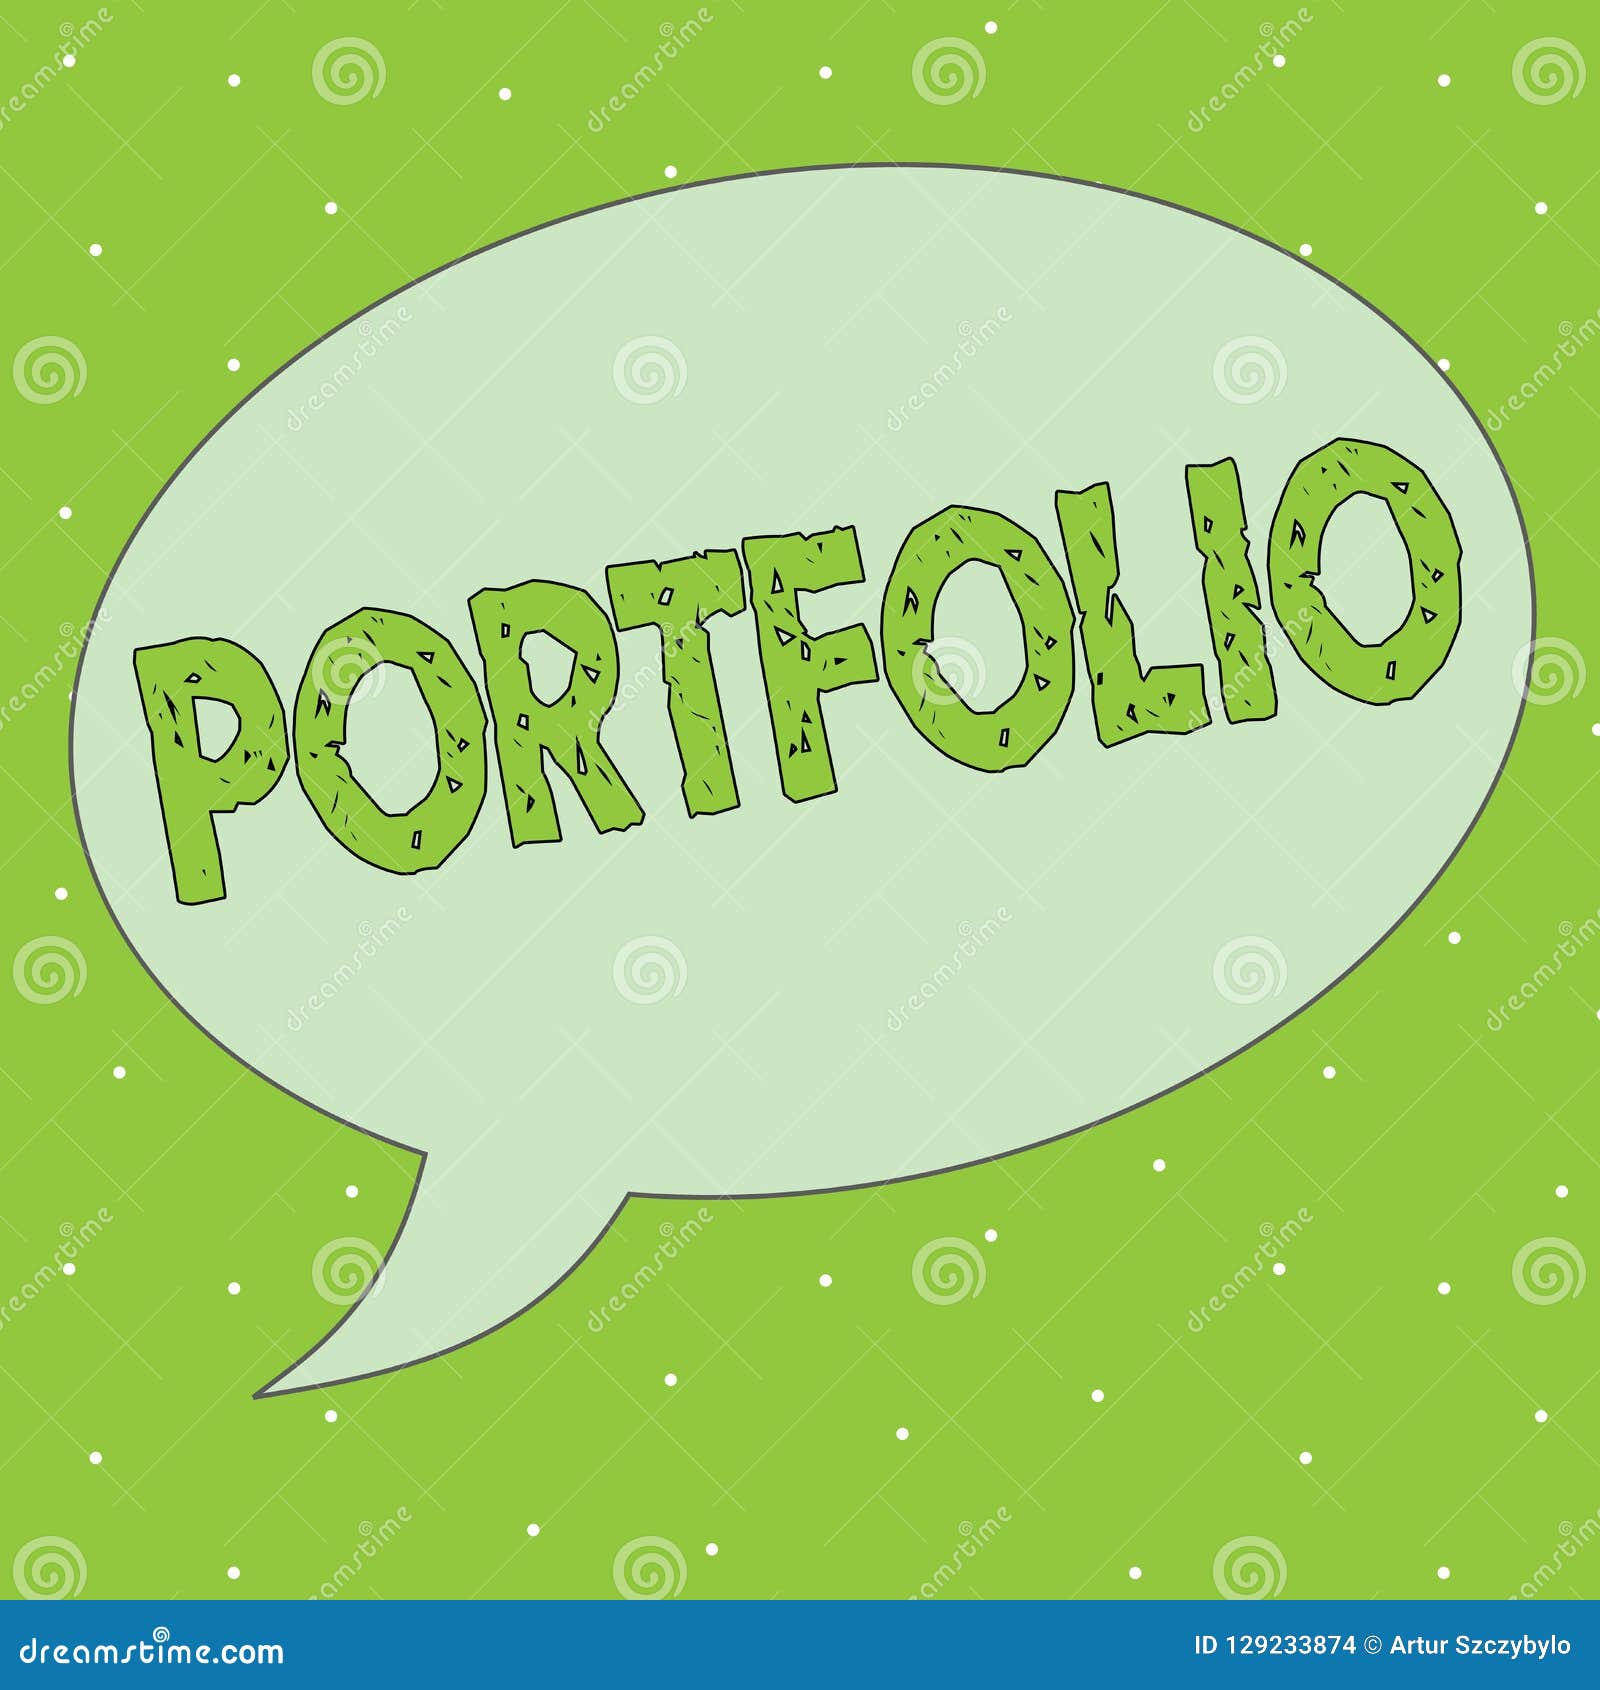 Career meaning portfolio Portfolio Career: